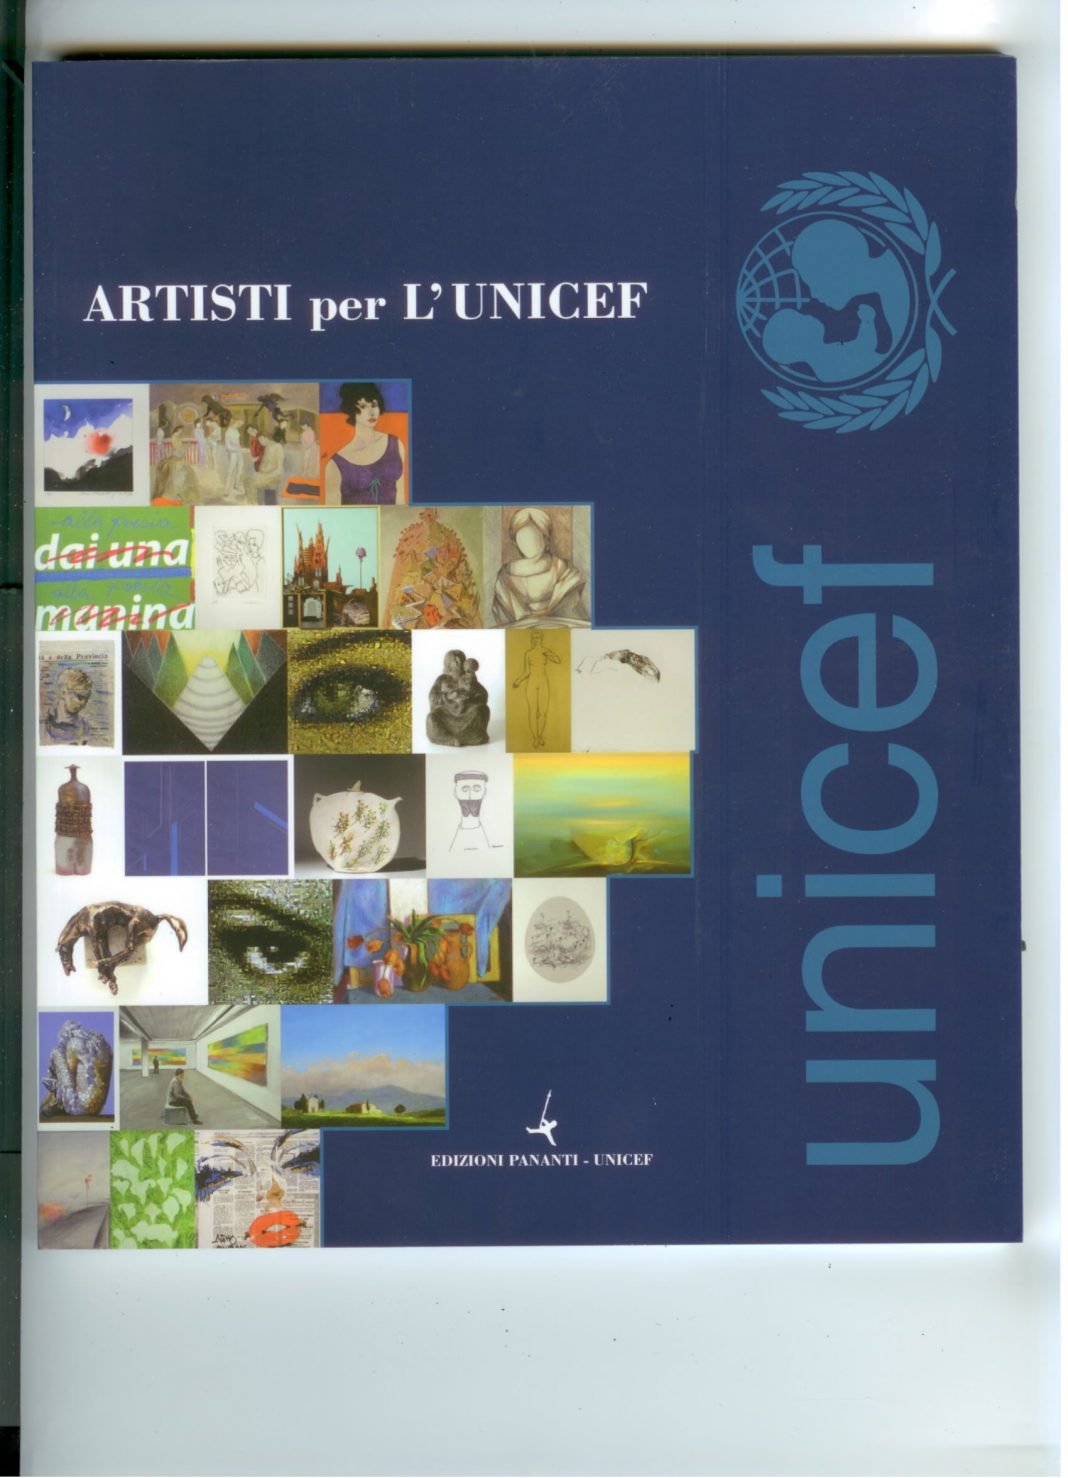 Artisti per l’UNICEFhttps://www.exibart.com/repository/media/eventi/2011/12/artisti-per-l8217unicef-1068x1478.jpg